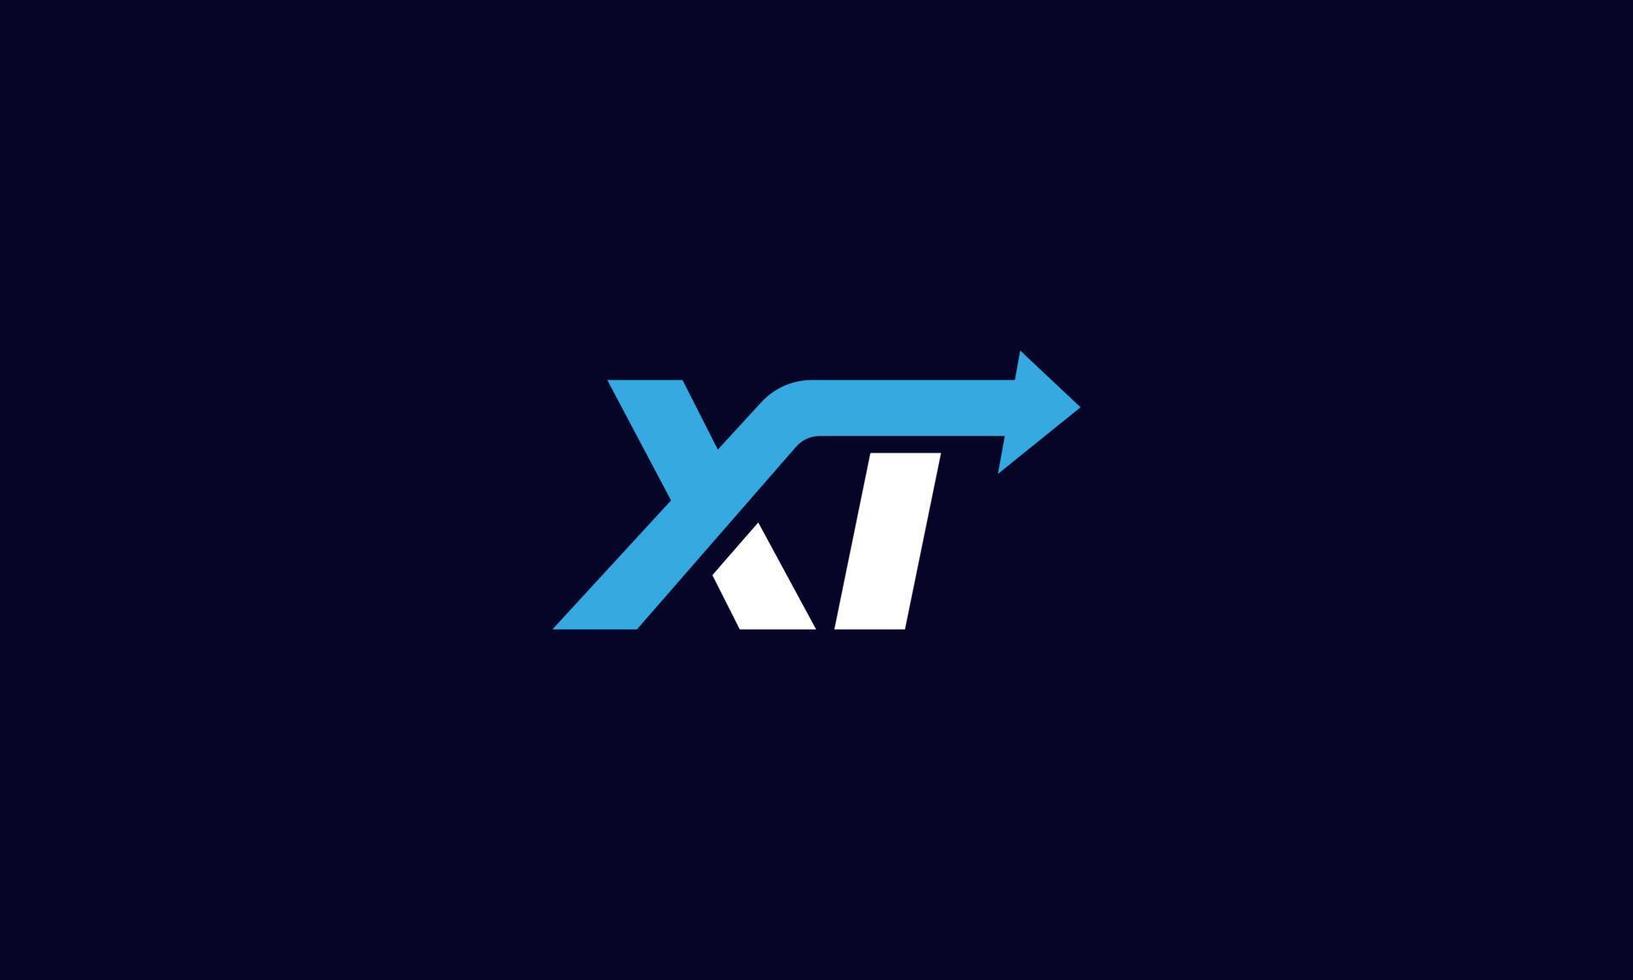 xt-logo ontwerp. letter xt-logo-ontwerp met moderne en strakke stijl vector